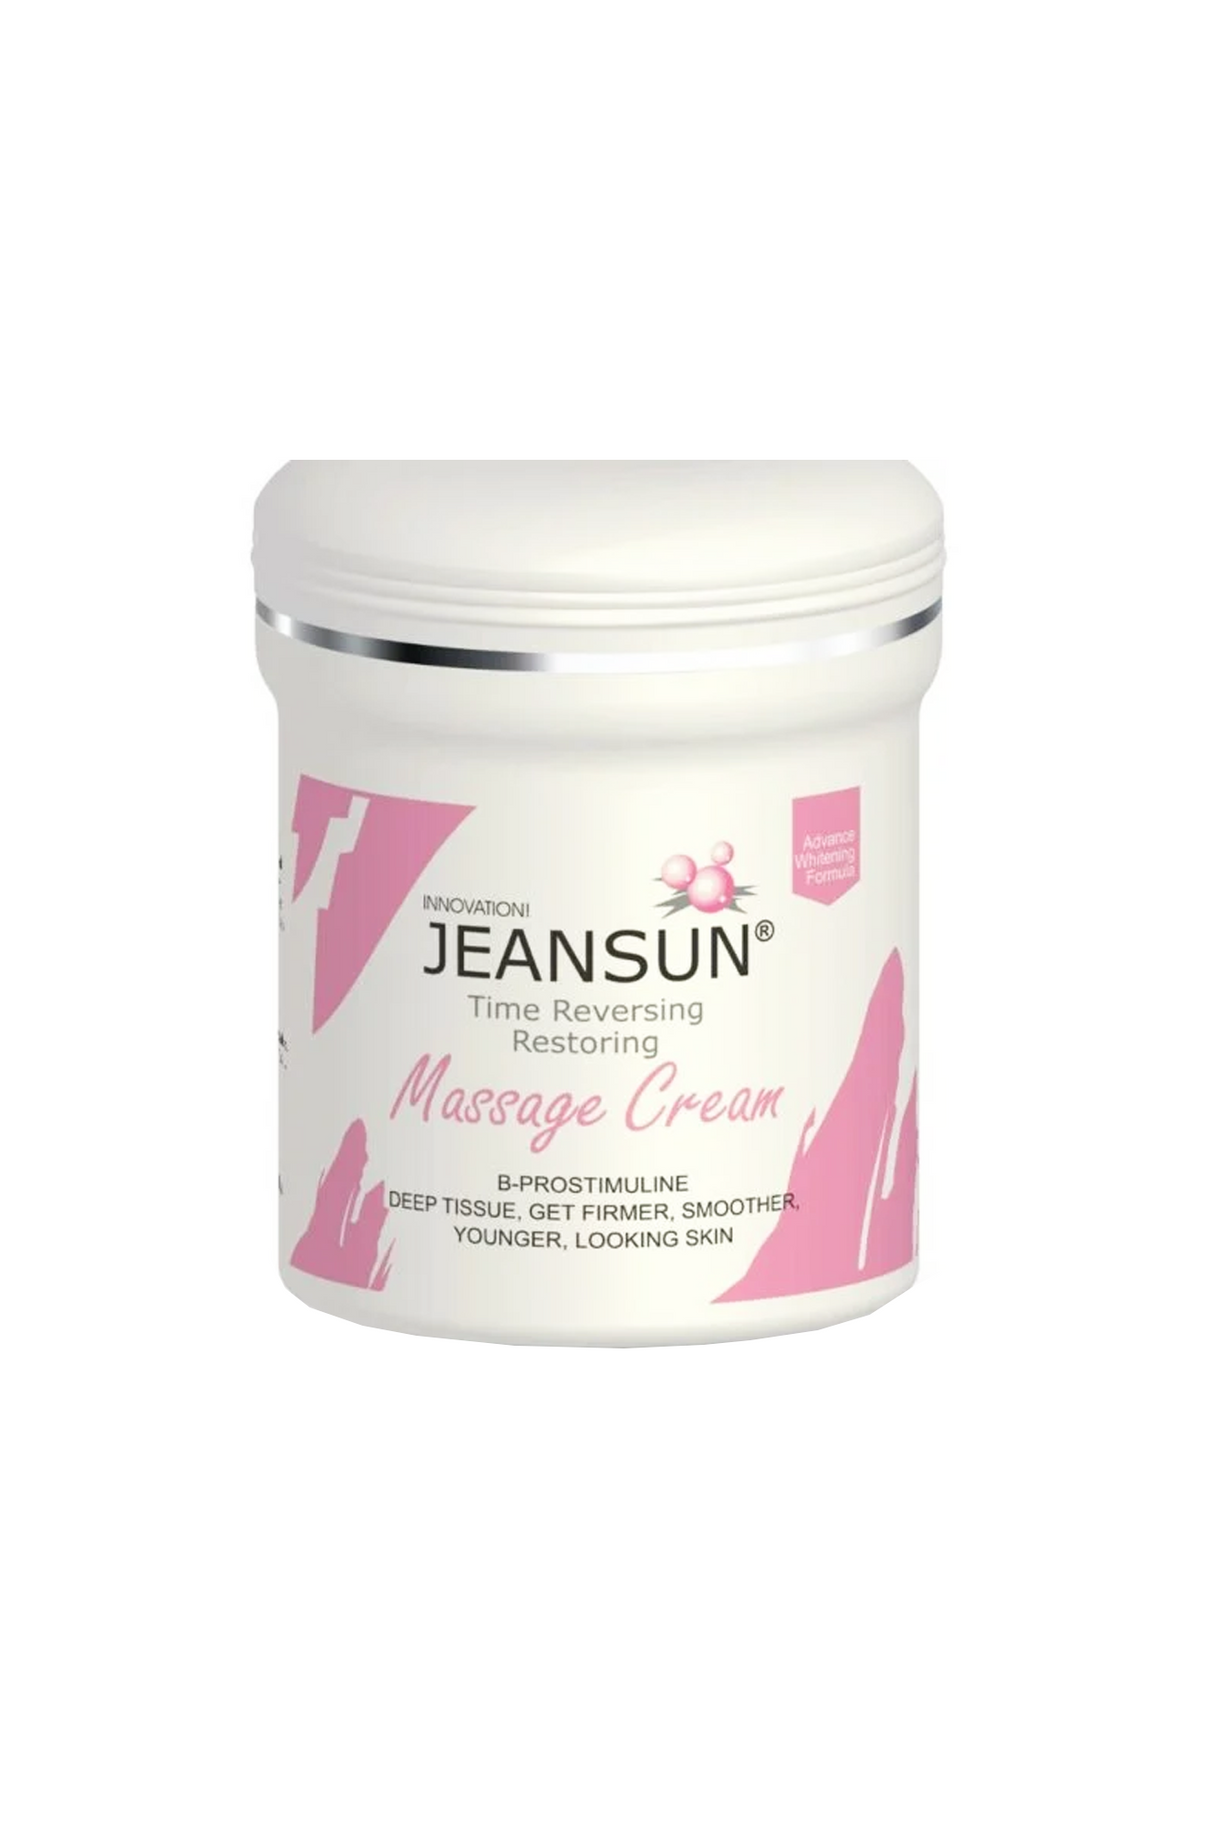 jeansun massage cream 200g